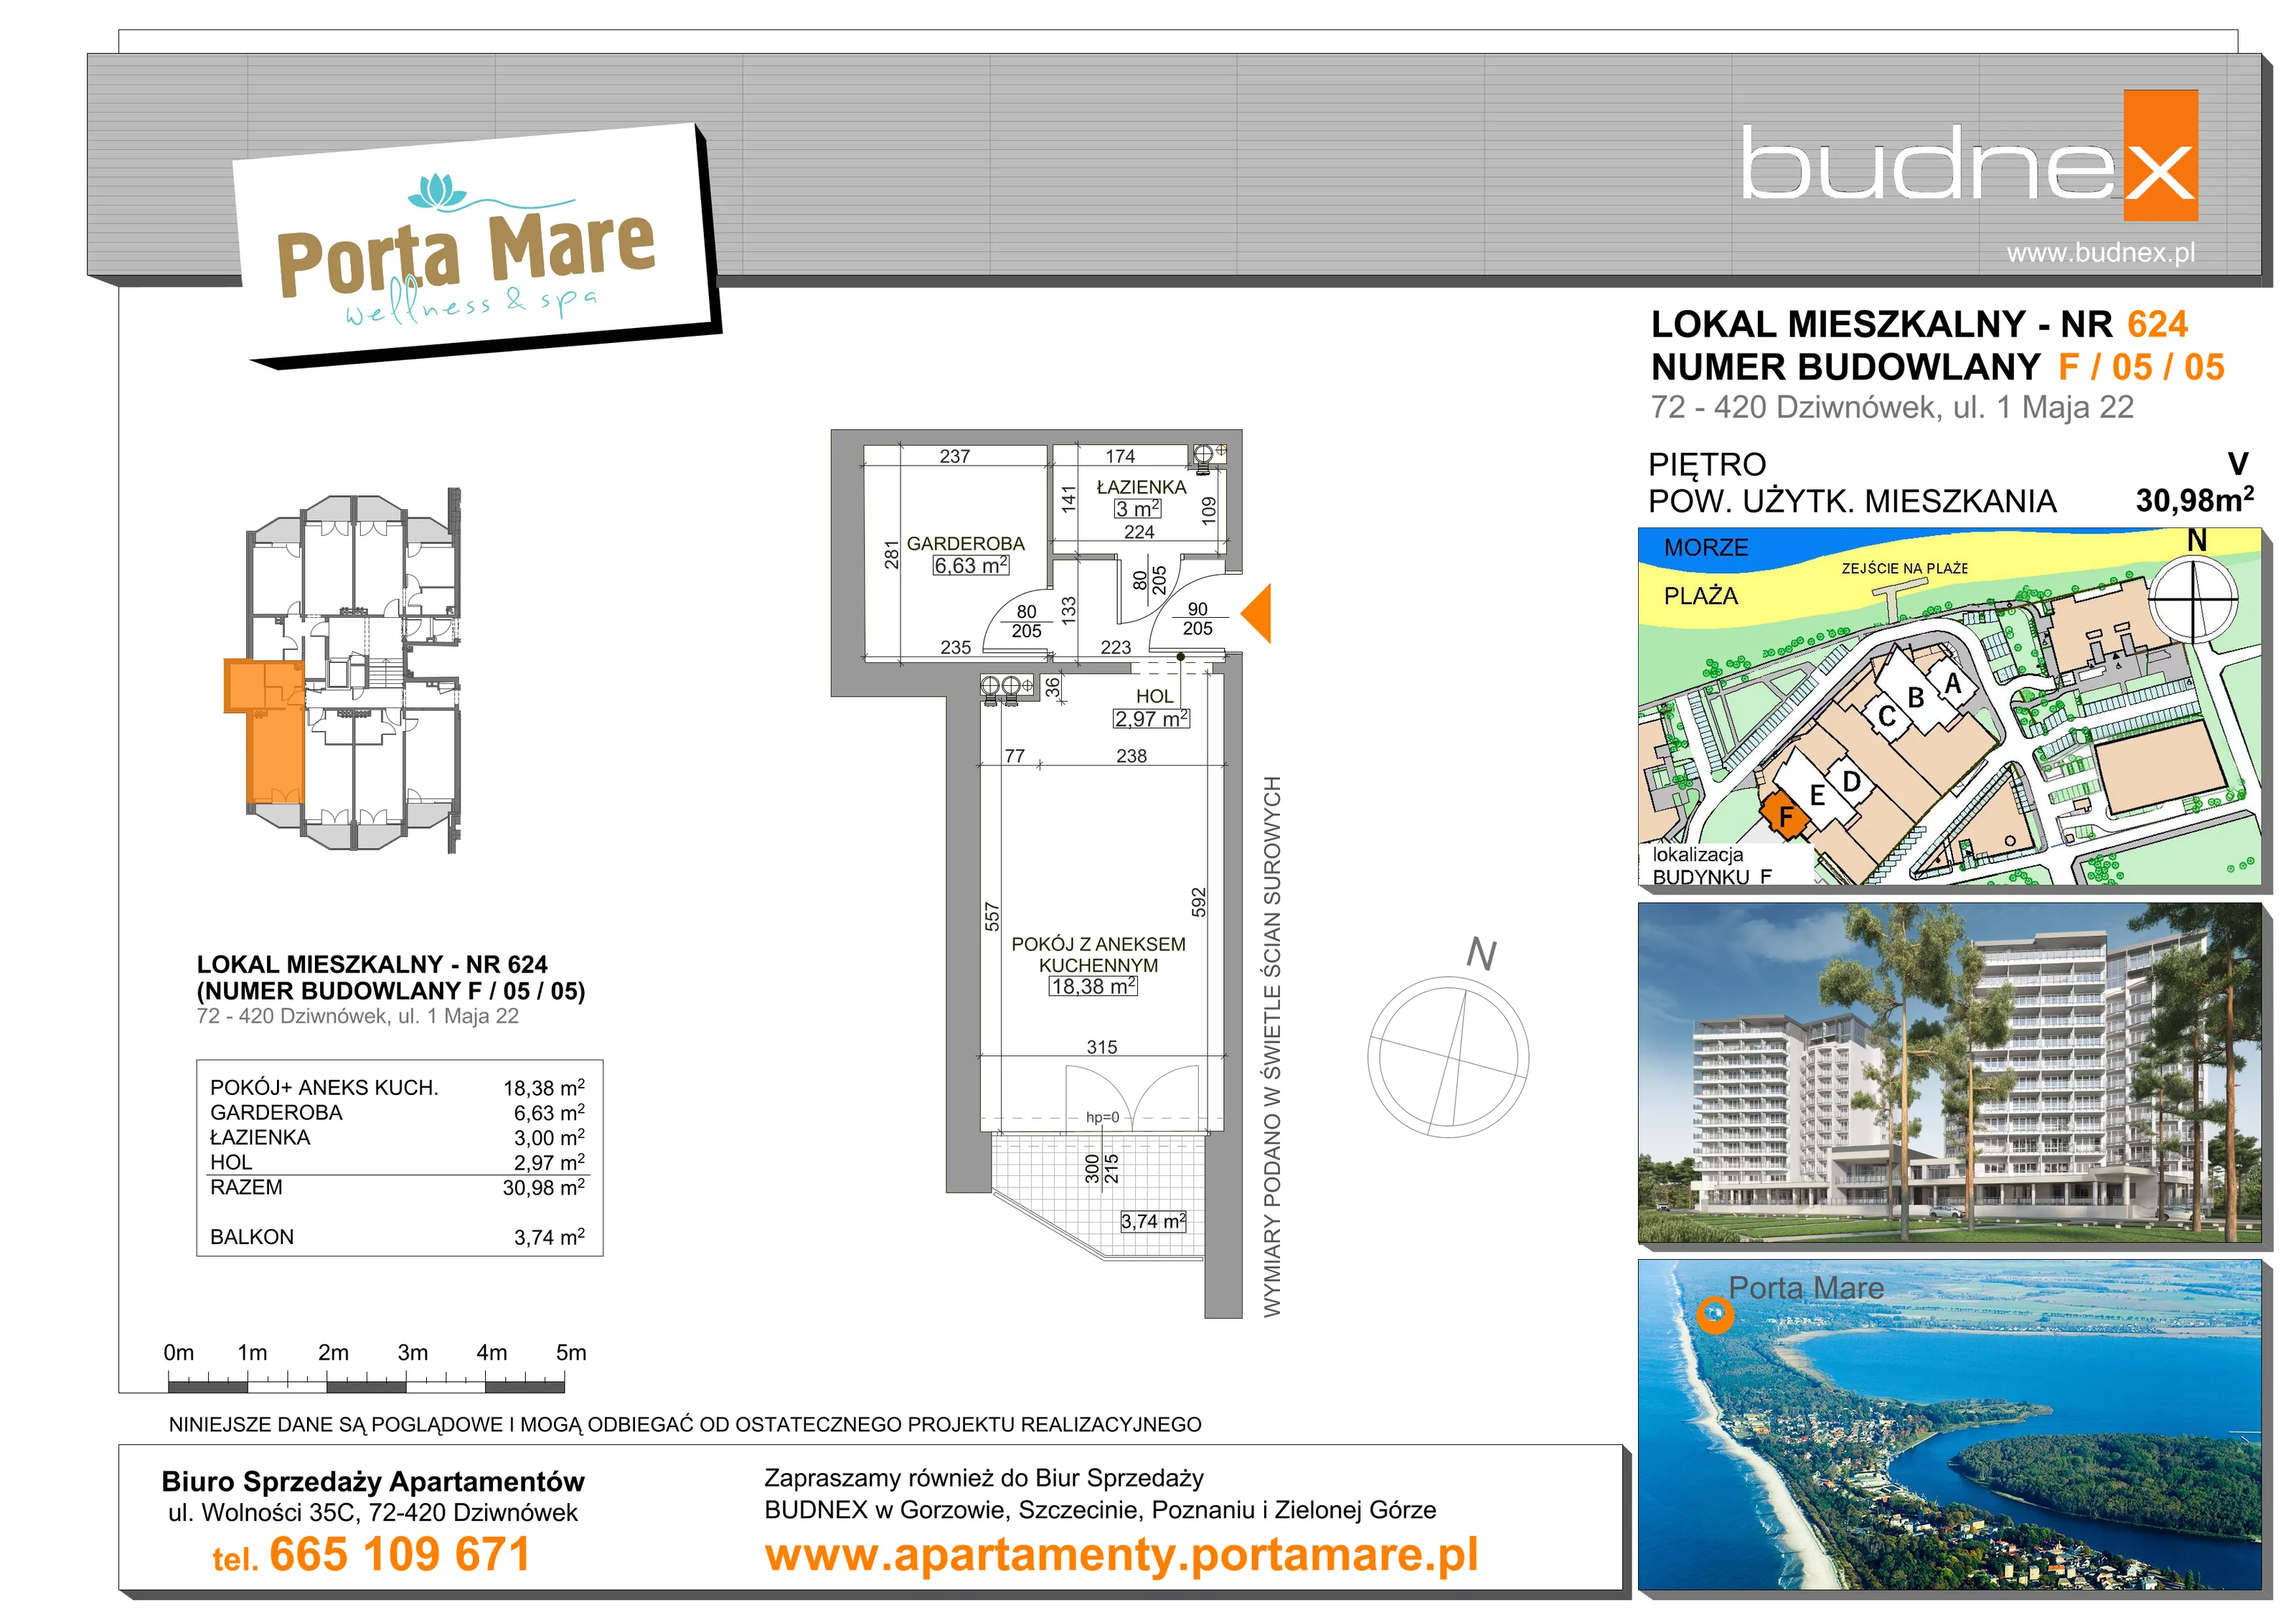 Apartament 30,98 m², piętro 5, oferta nr 624, Porta Mare Wellness & Spa, Dziwnówek, ul. Wolności